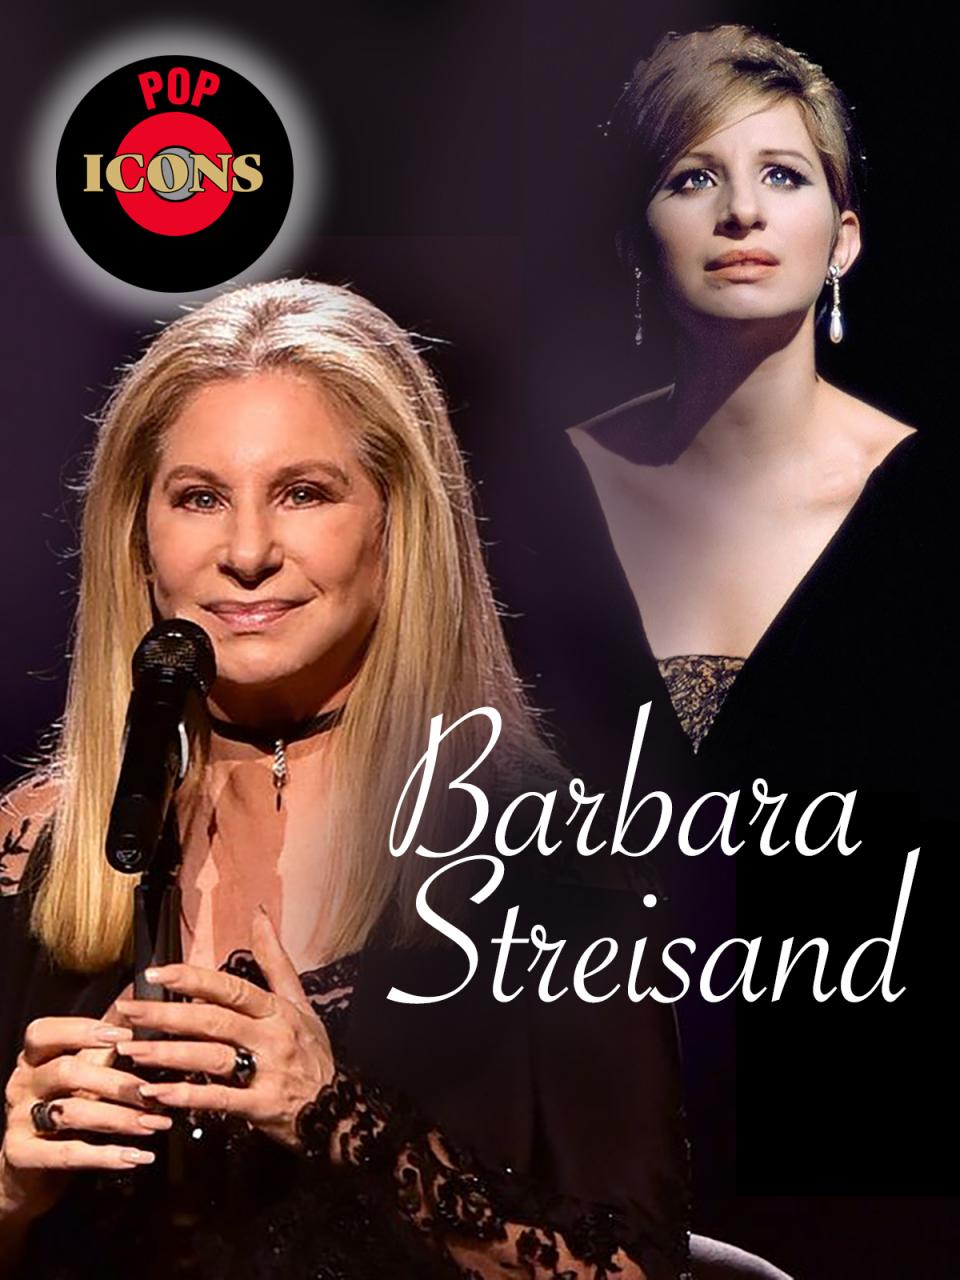 Pop Icons: Barbara Streisand